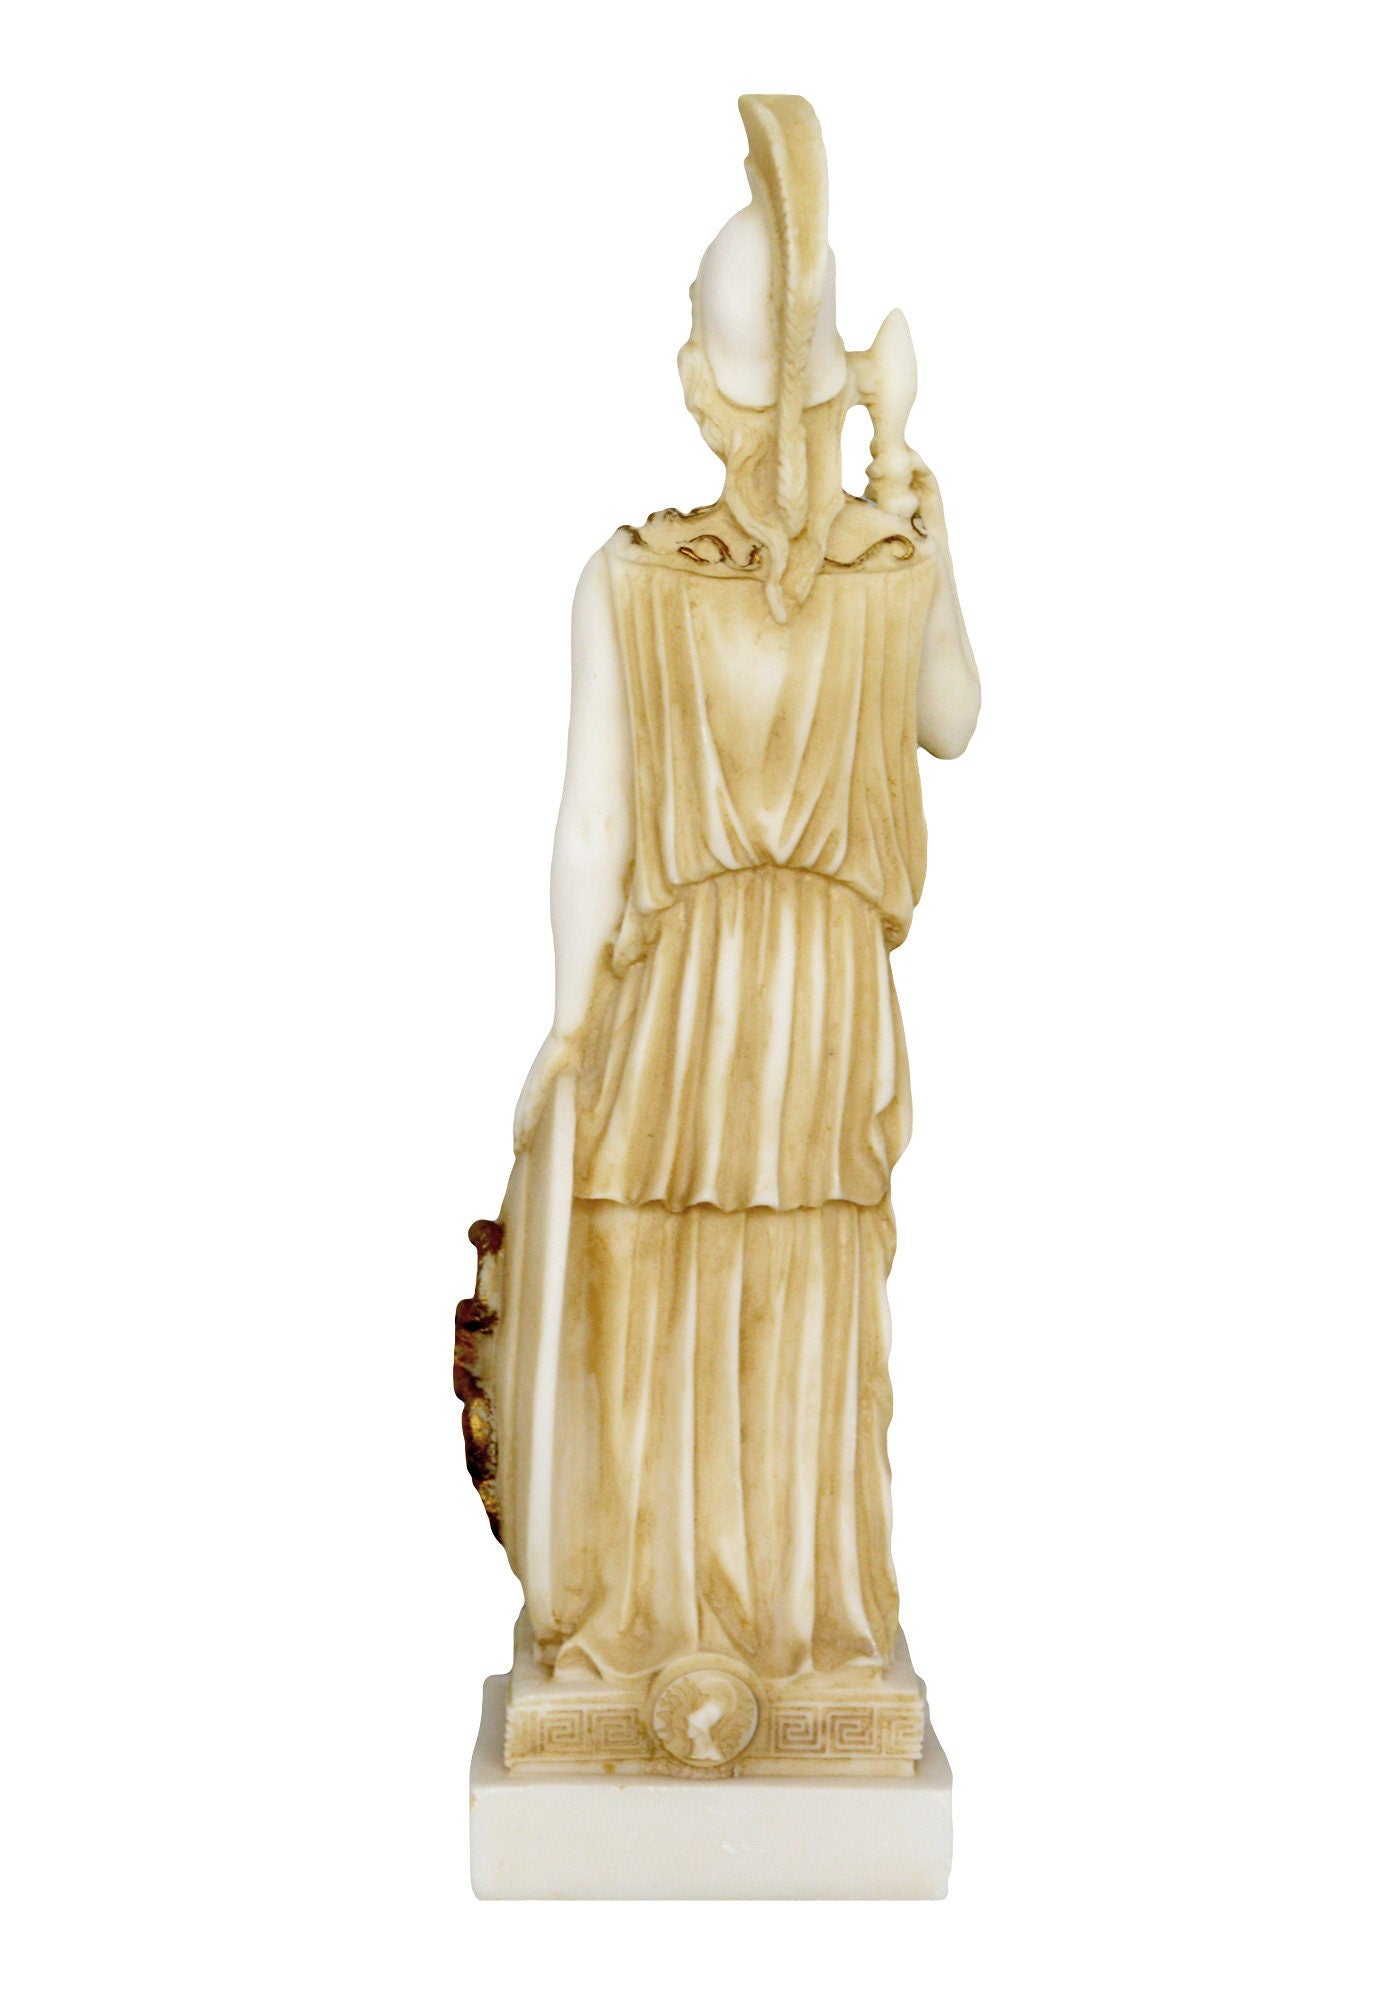 Athena Minerva - Greek Roman Goddes of Wisdom, Strength, Strategy, Courage, Inspiration, Arts, Crafts, and Skill - Aged Alabaster Sculpture